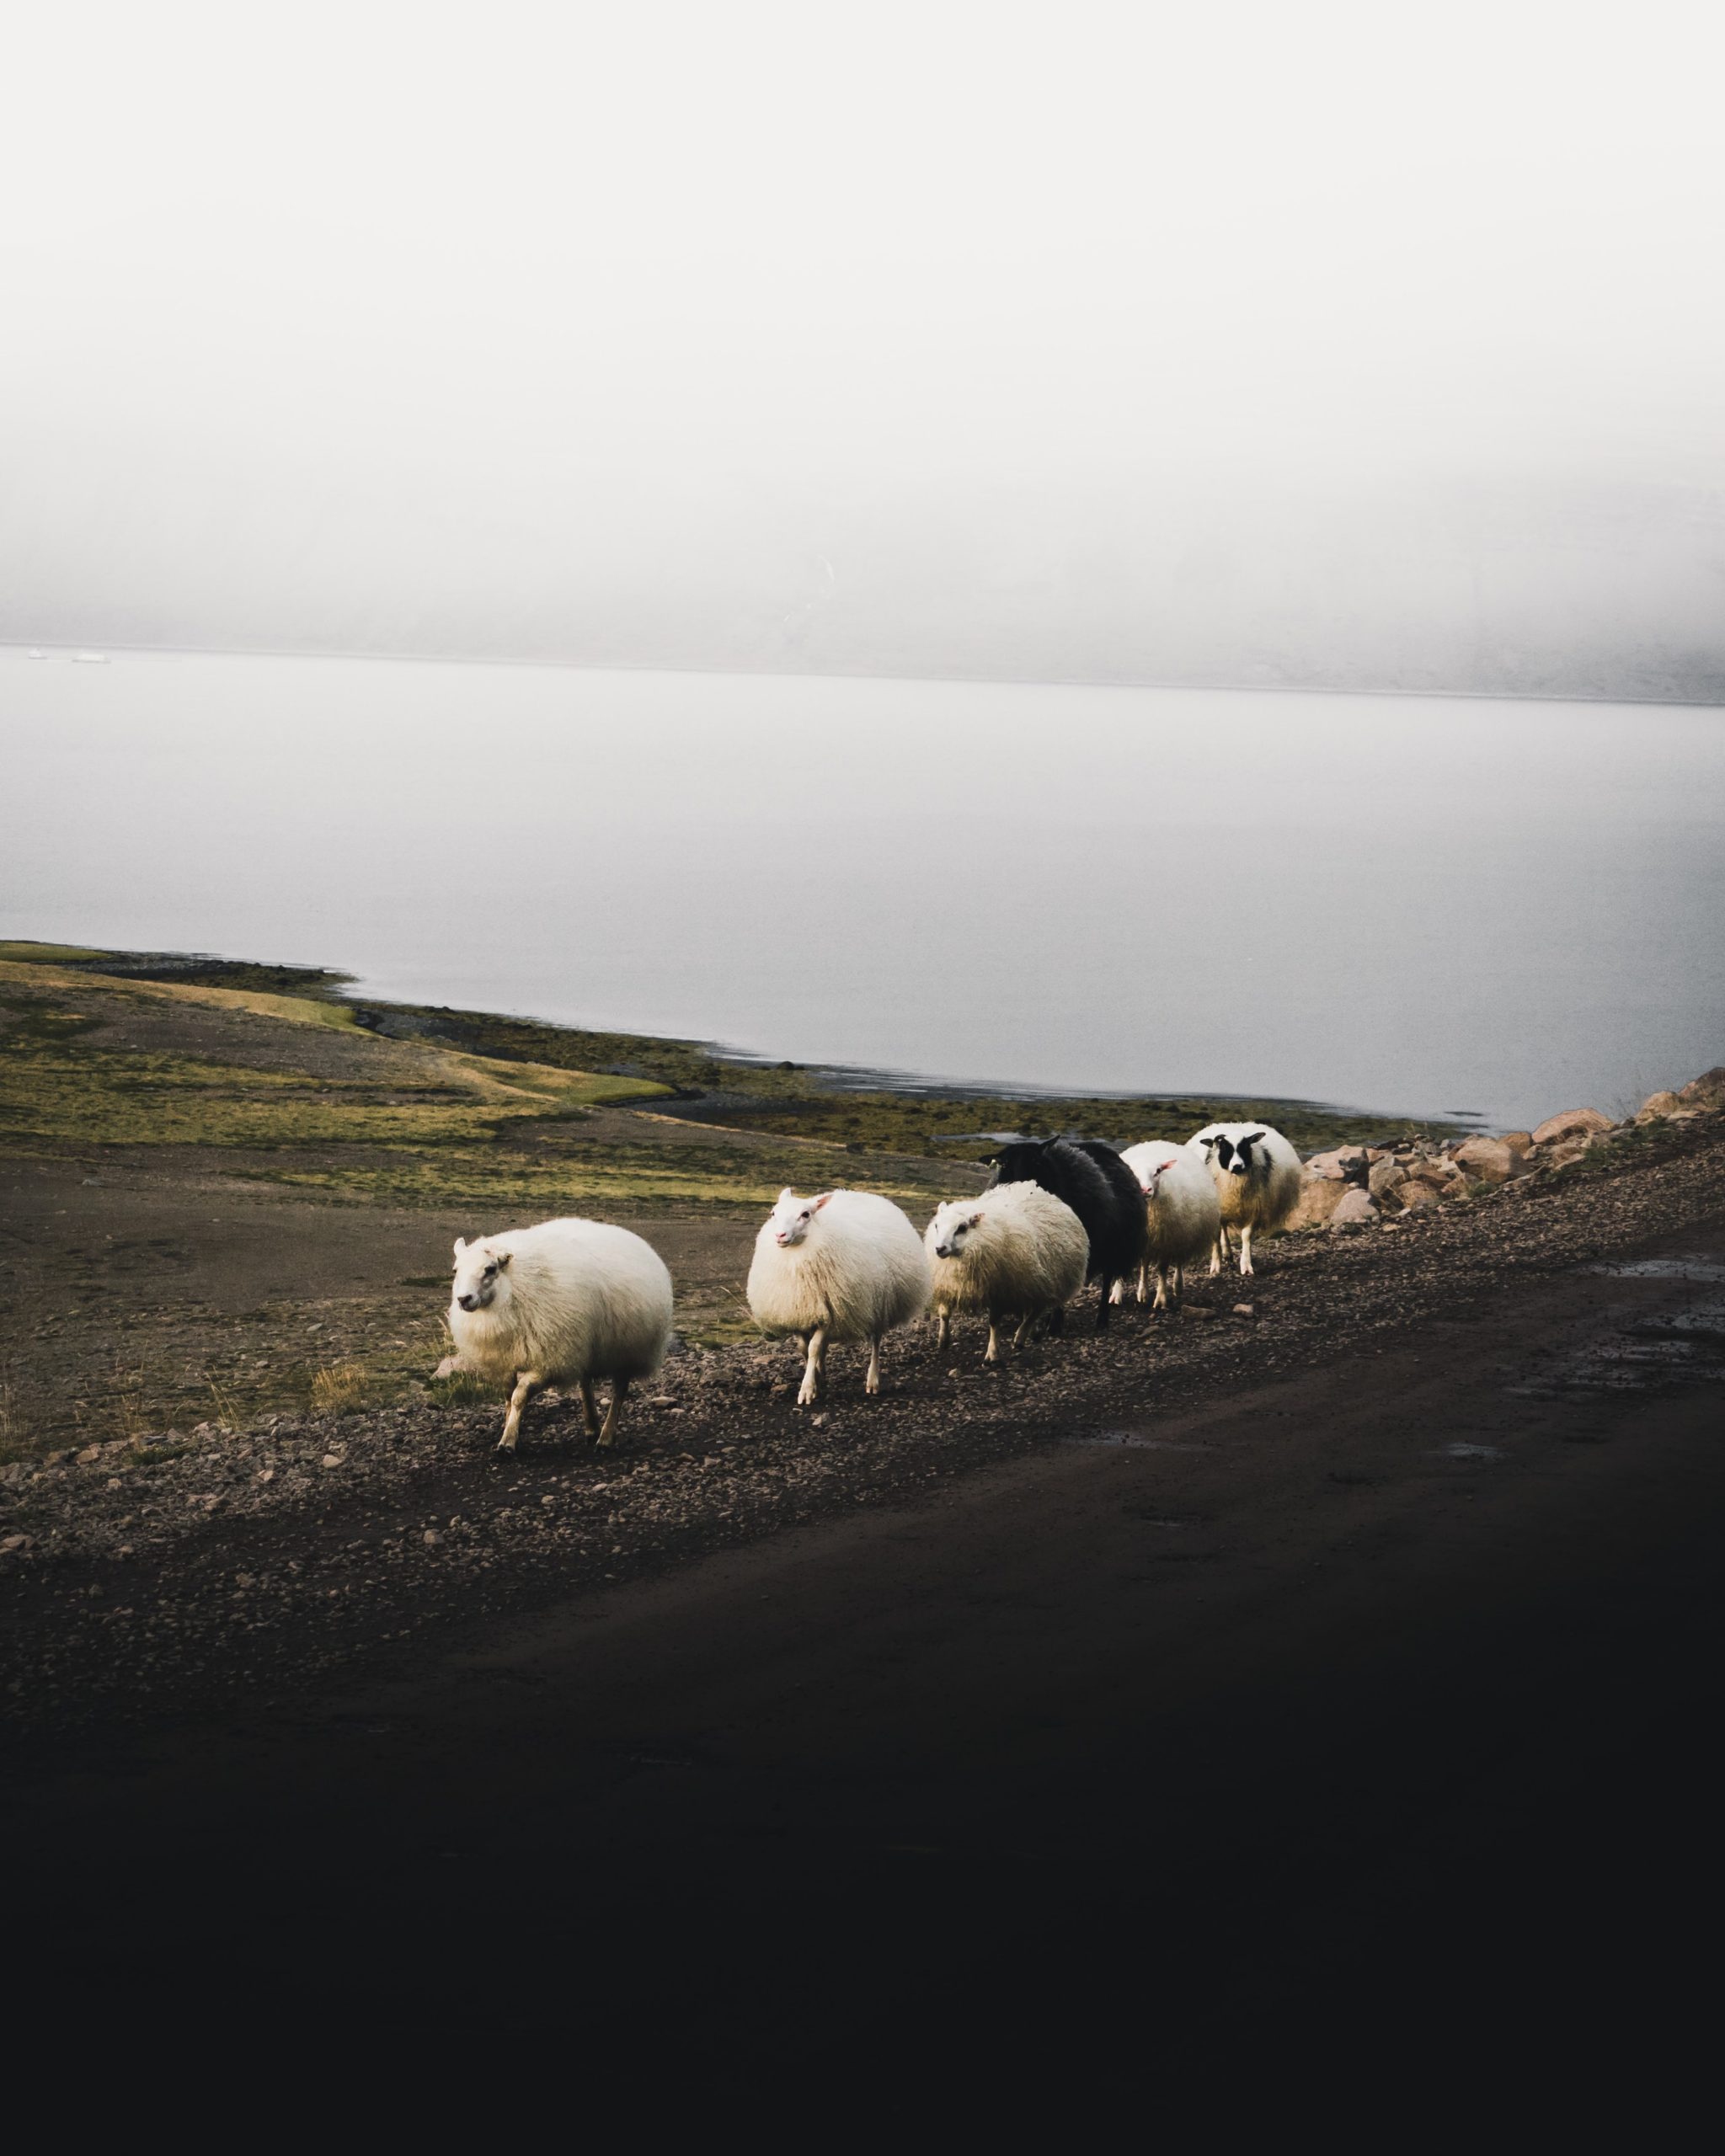 TikTok Trends - An image of sheep walking